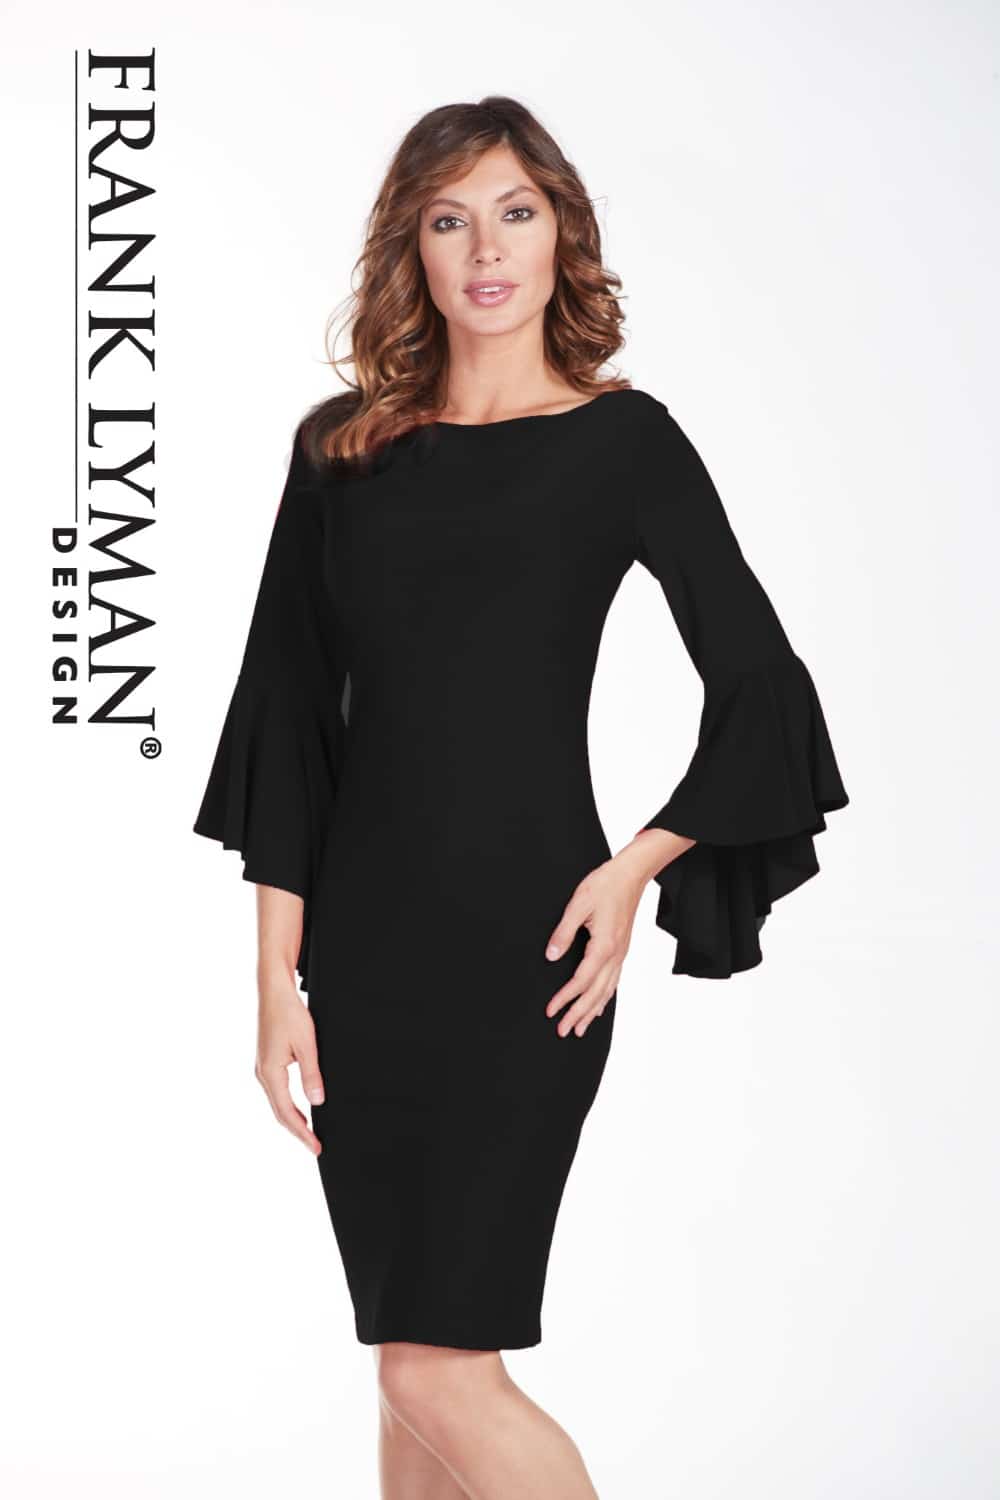 Frank Lyman Dress Style 175037-BLK Black bmboutique1.myshopify.com